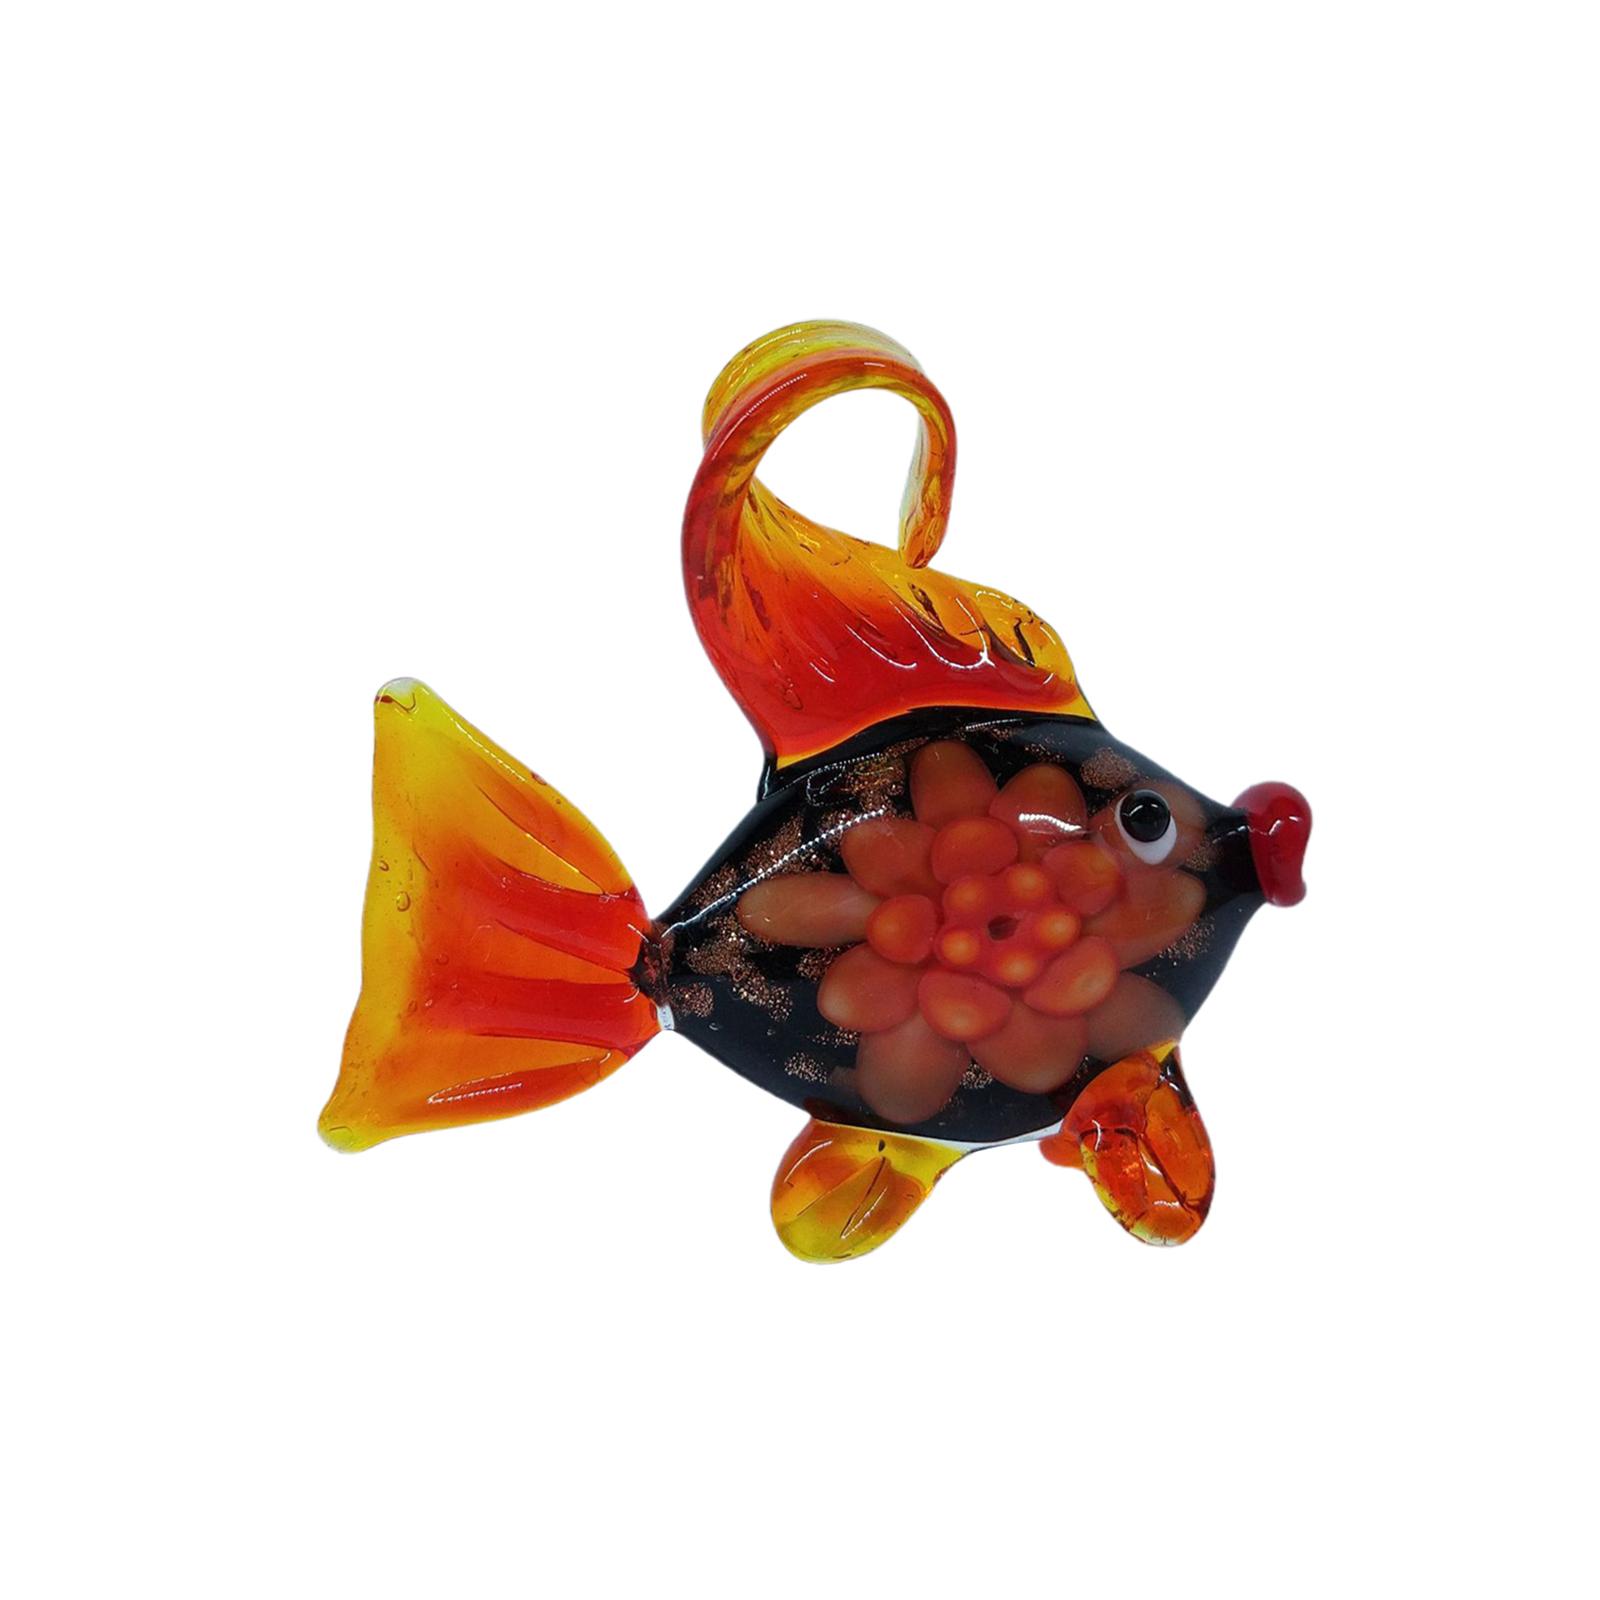 Fish Ornament Landscape Supplies Fish Tank Craft Creative Decorations Red